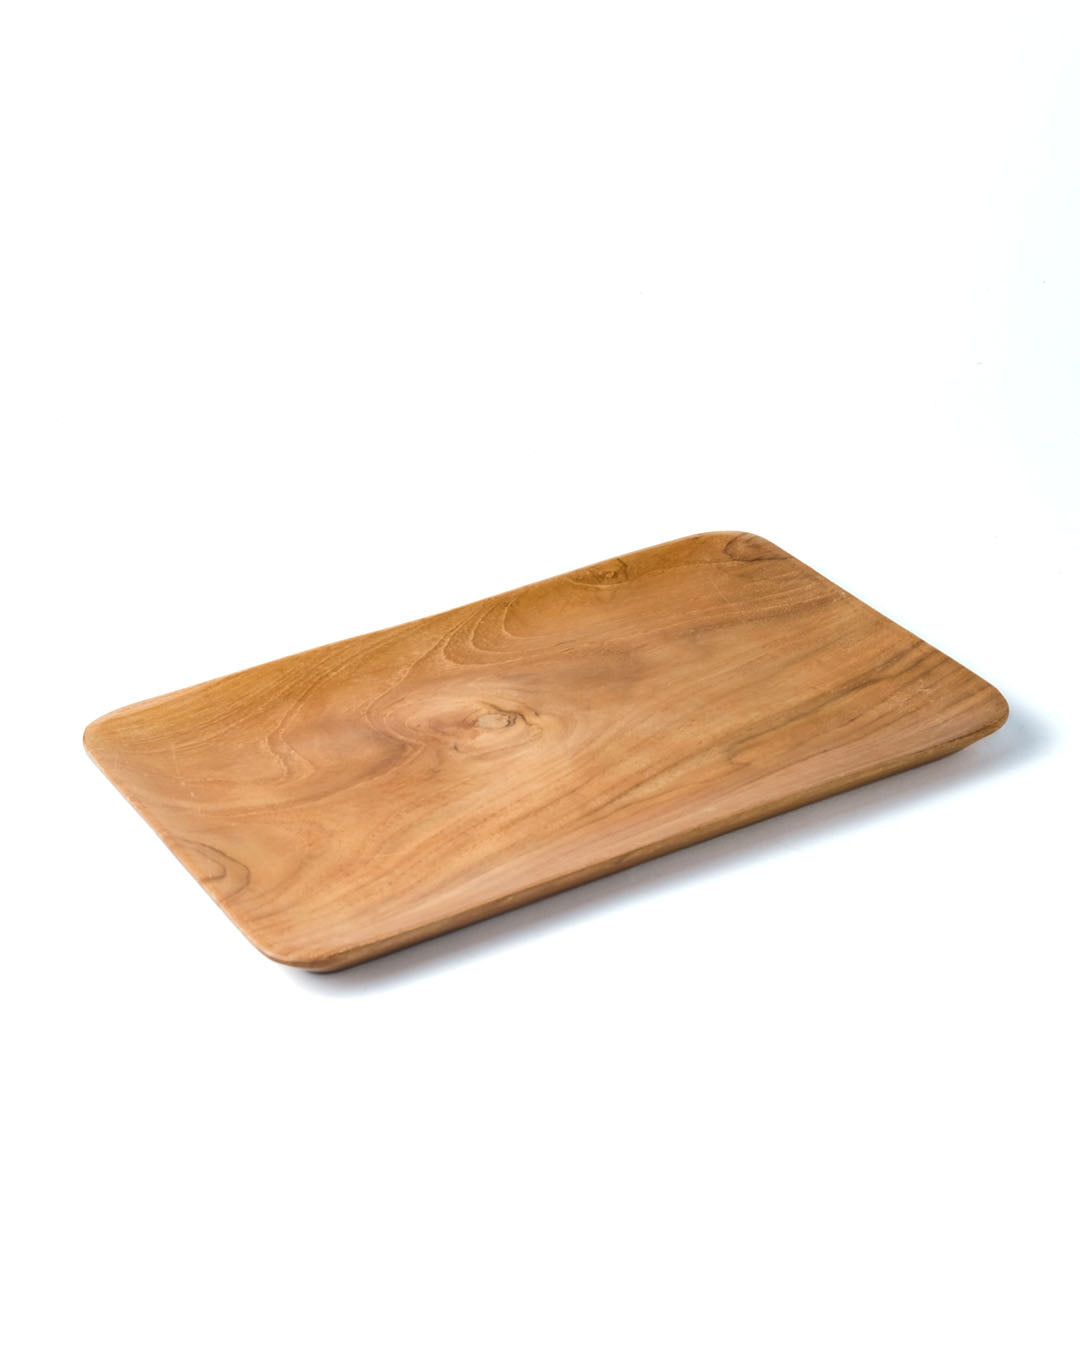 Plato para servir de madera de teka rectangular Sragen, hecho a mano en Indonesia,  altura 2 cm largo 30 cm profundidad 19,5 cm.